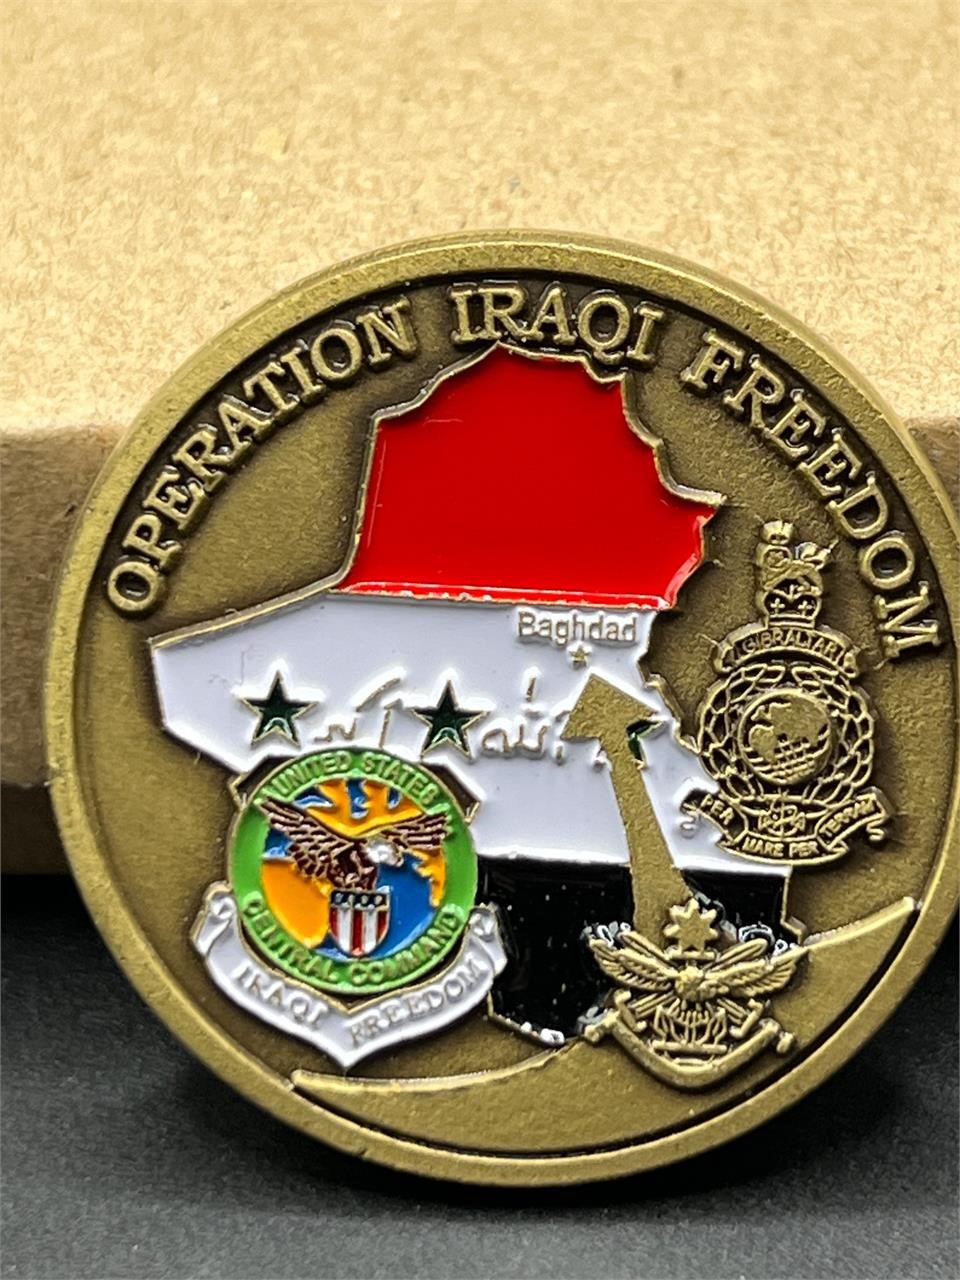 Operation Iraqi Freedom Challenge Coin